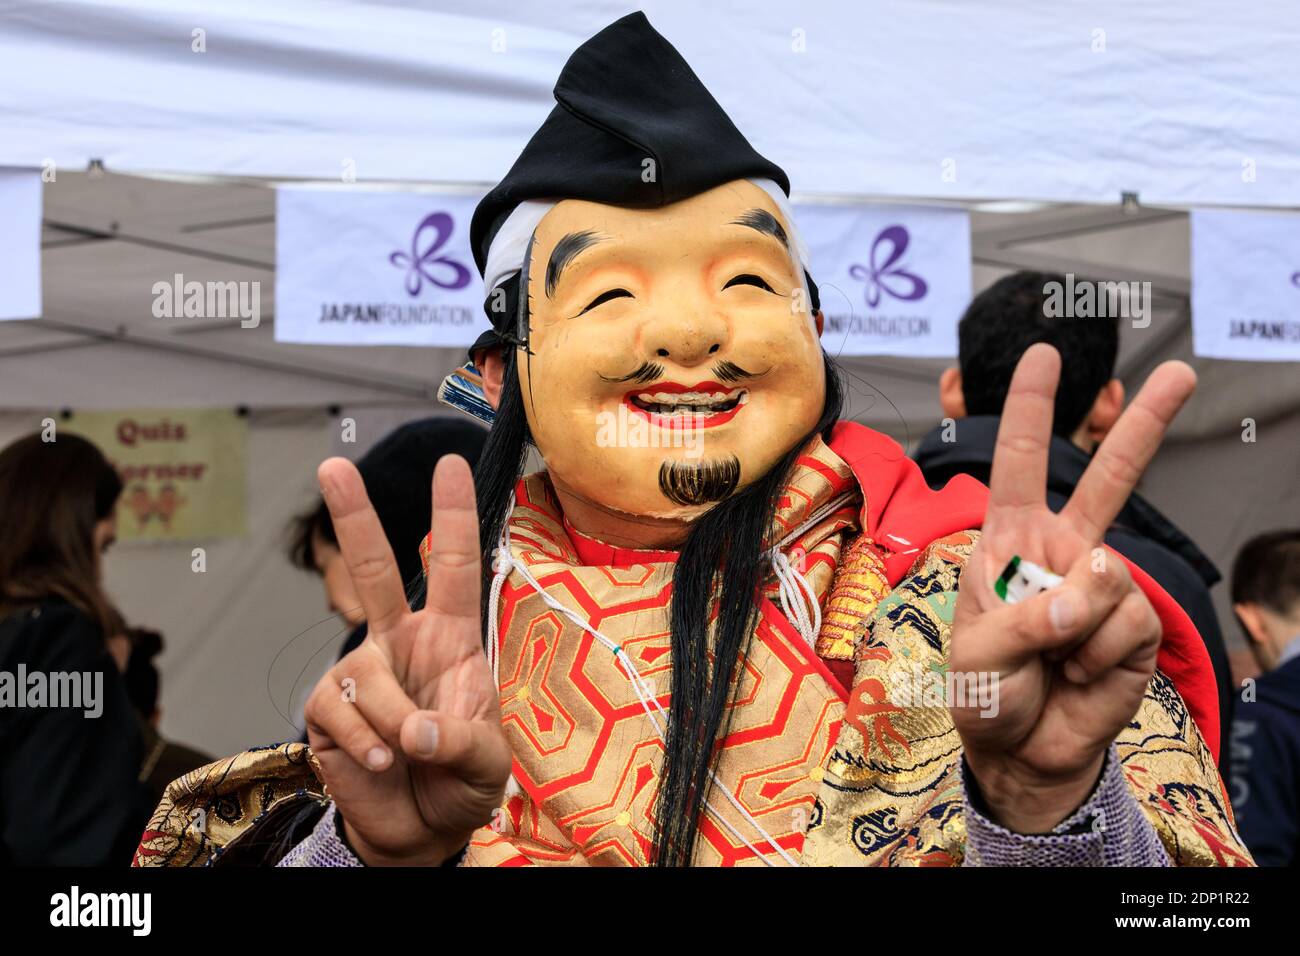 Participant in Asian mask at Japan Matsuri Festival on Trafalgar Square, London, UK Stock Photo